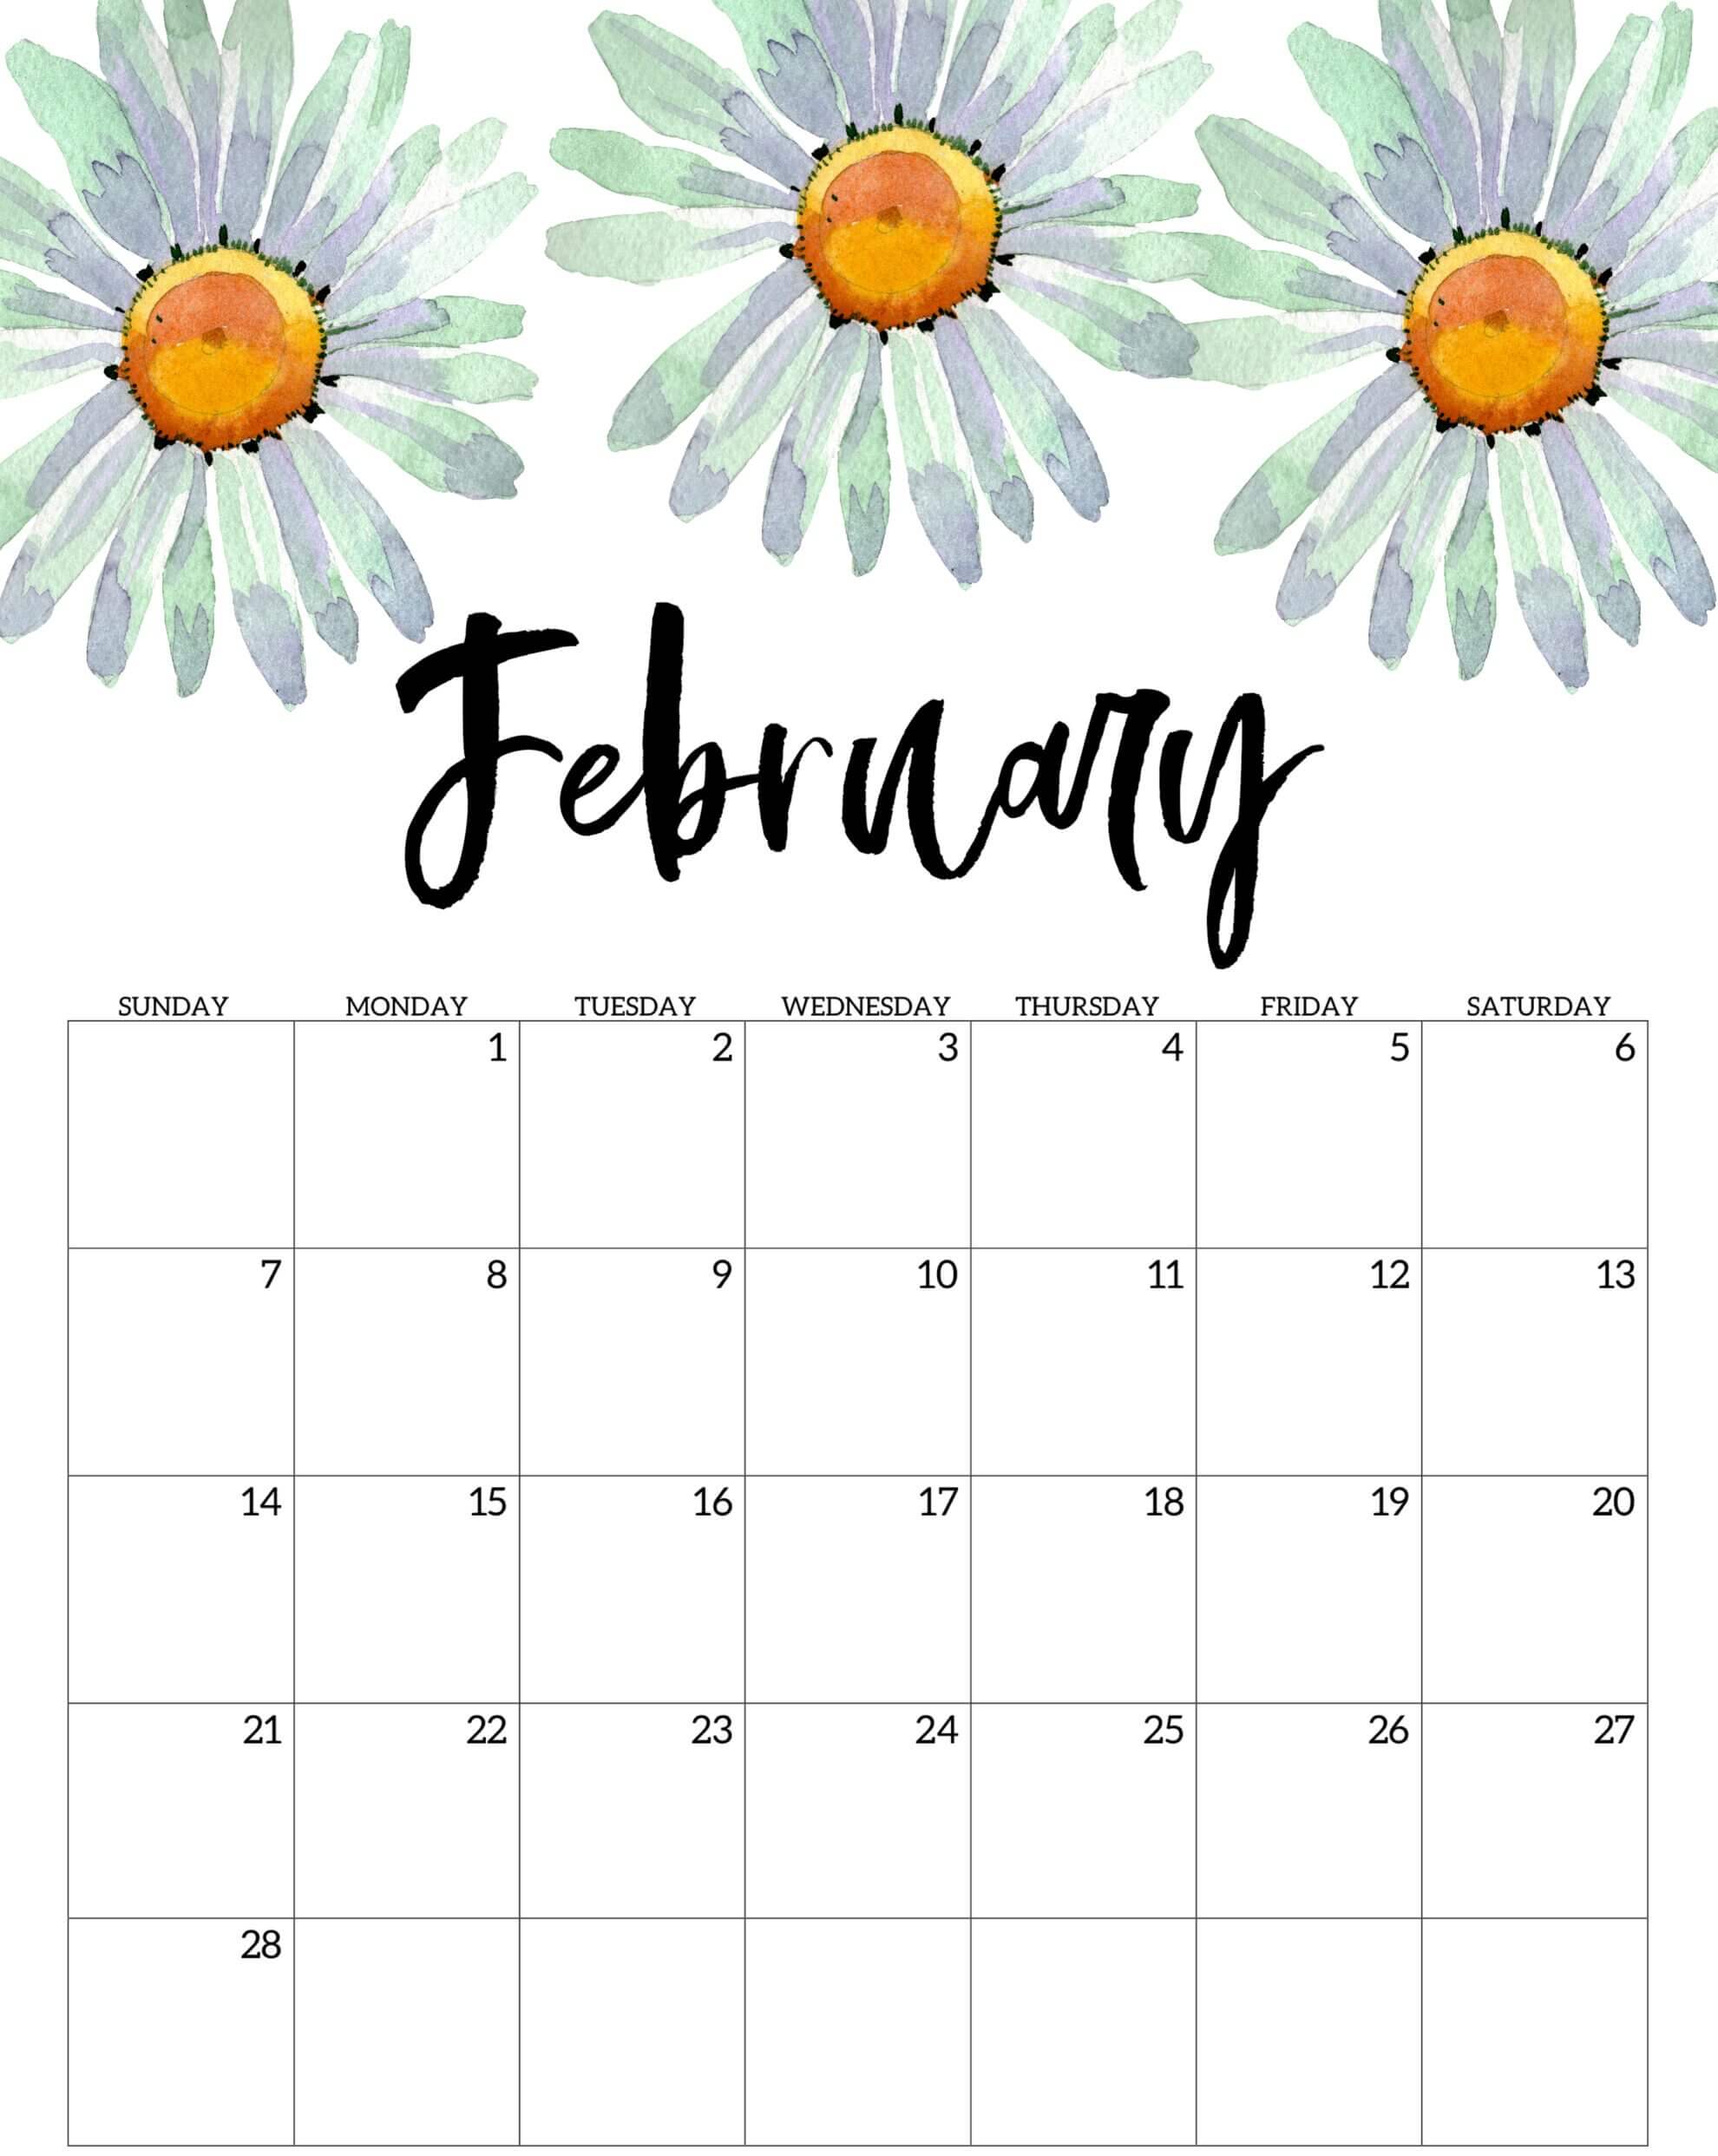 February 2021 Wall Calendar